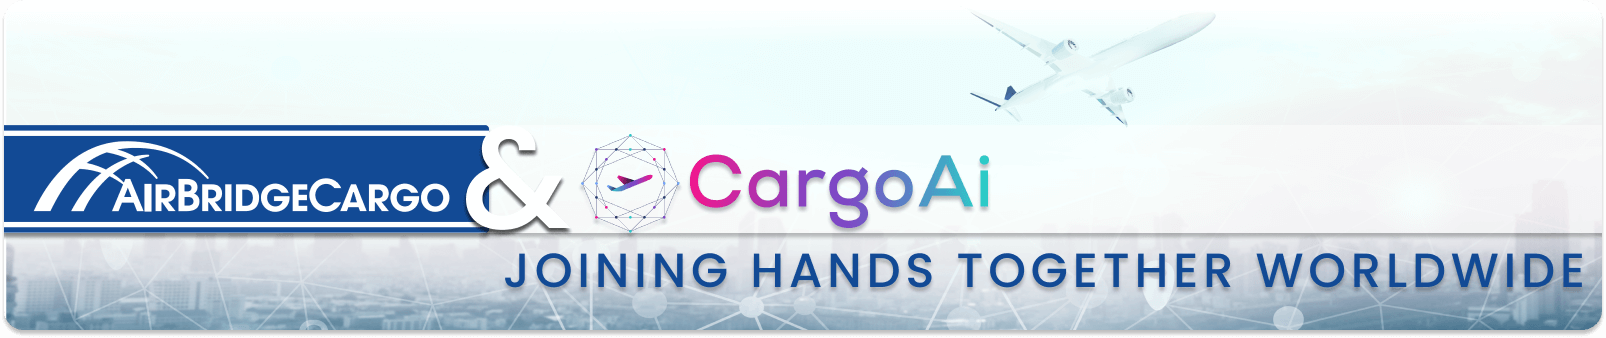 cargoai-airbridge-header.png